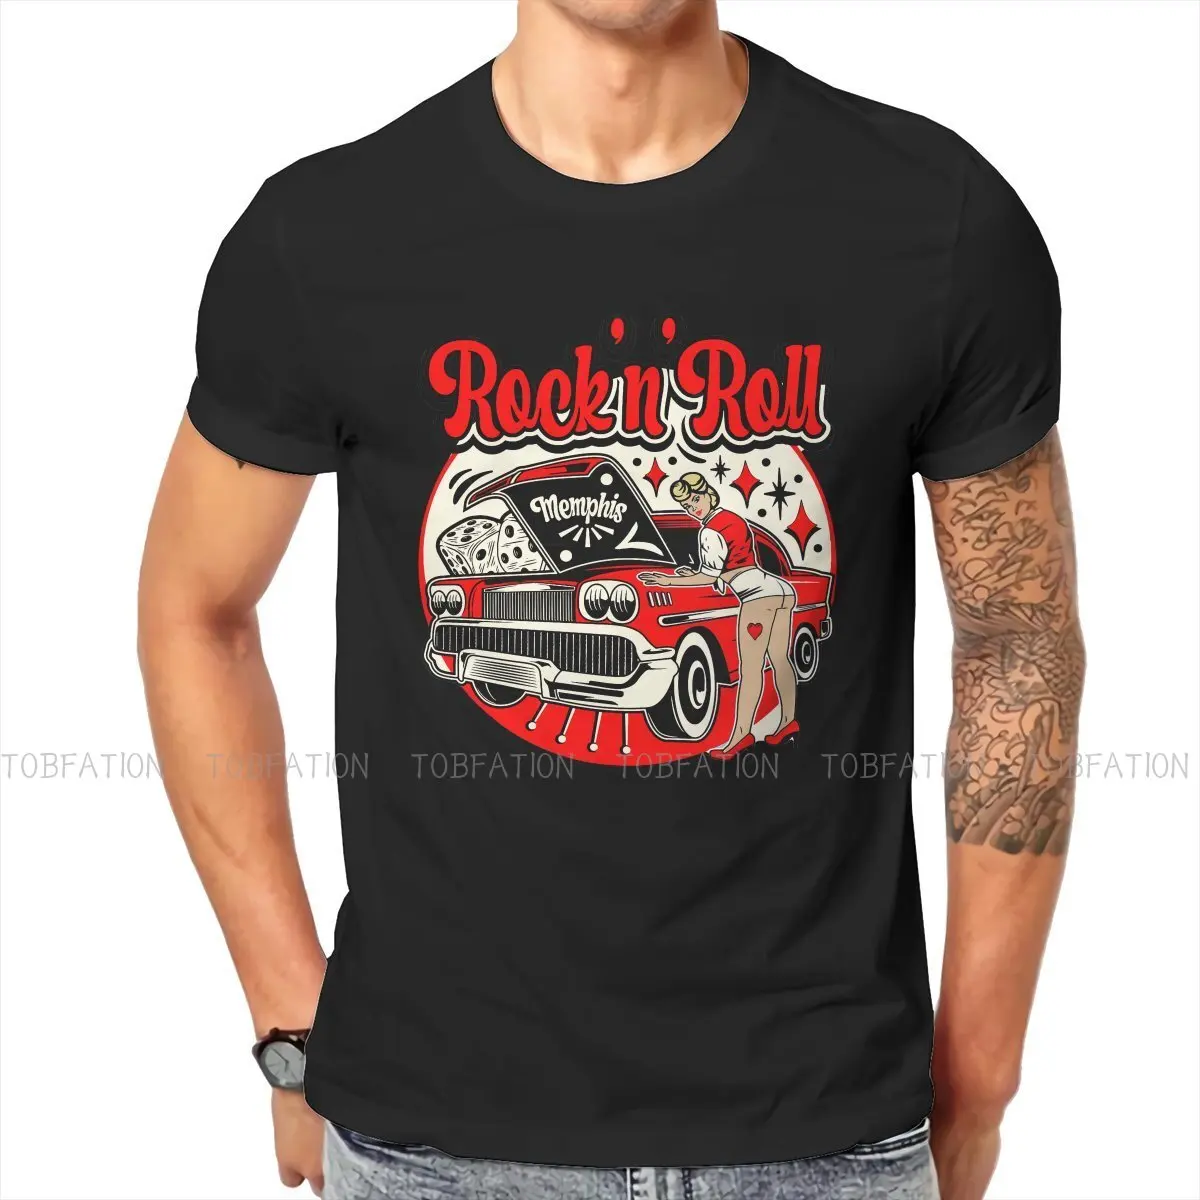 Rockabilly Party 50s Sock Hop Dance Pin Up Vintage Rock and Roll Memphis Tshirt Summer Men's Clothing Cotton Harajuku T Shirt